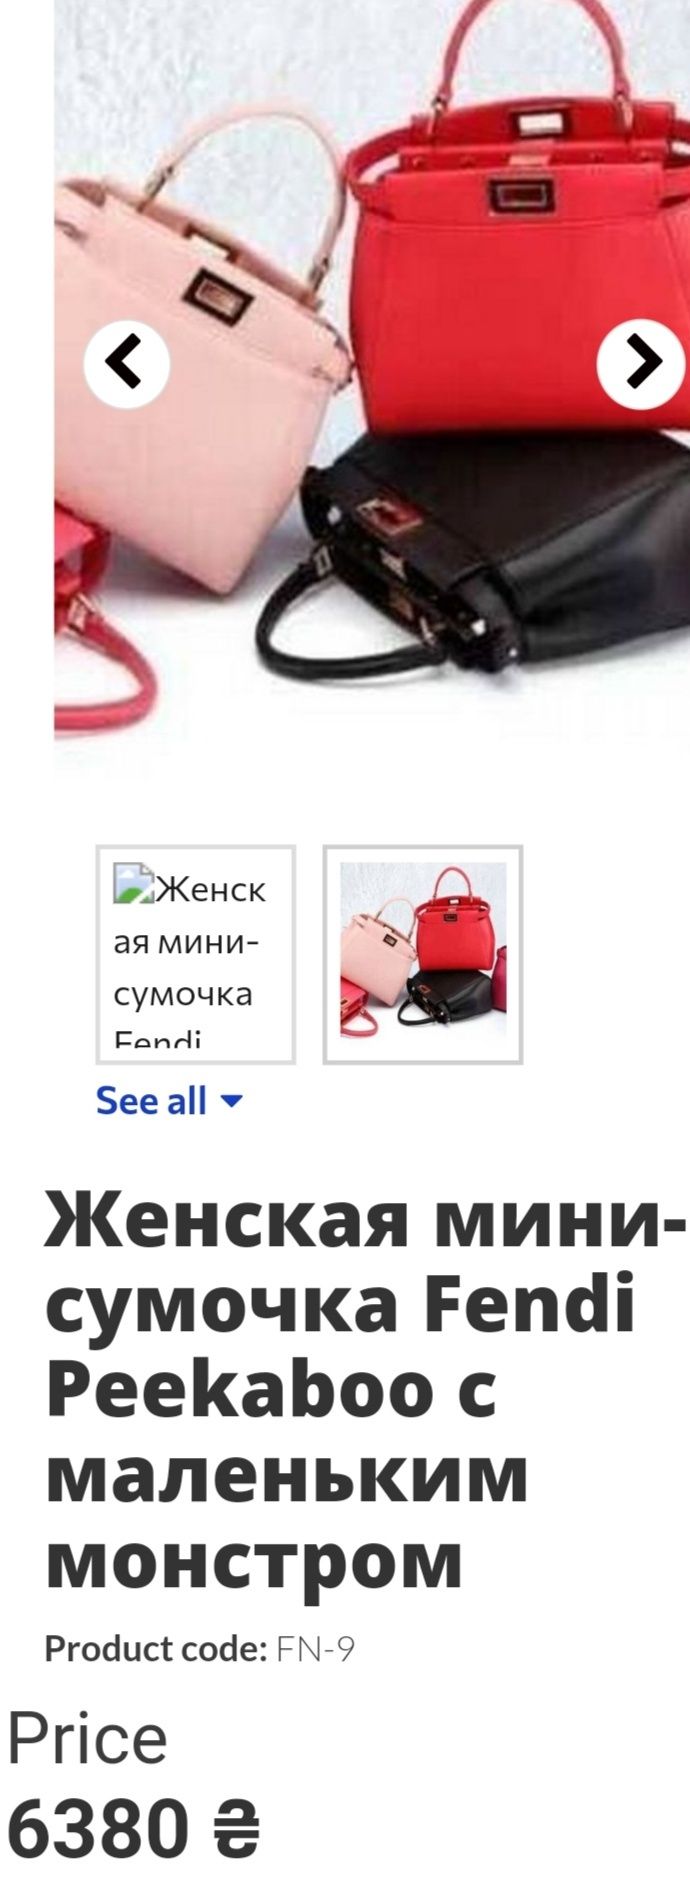 Мини-сумочка Fendy красная с синим подкладом